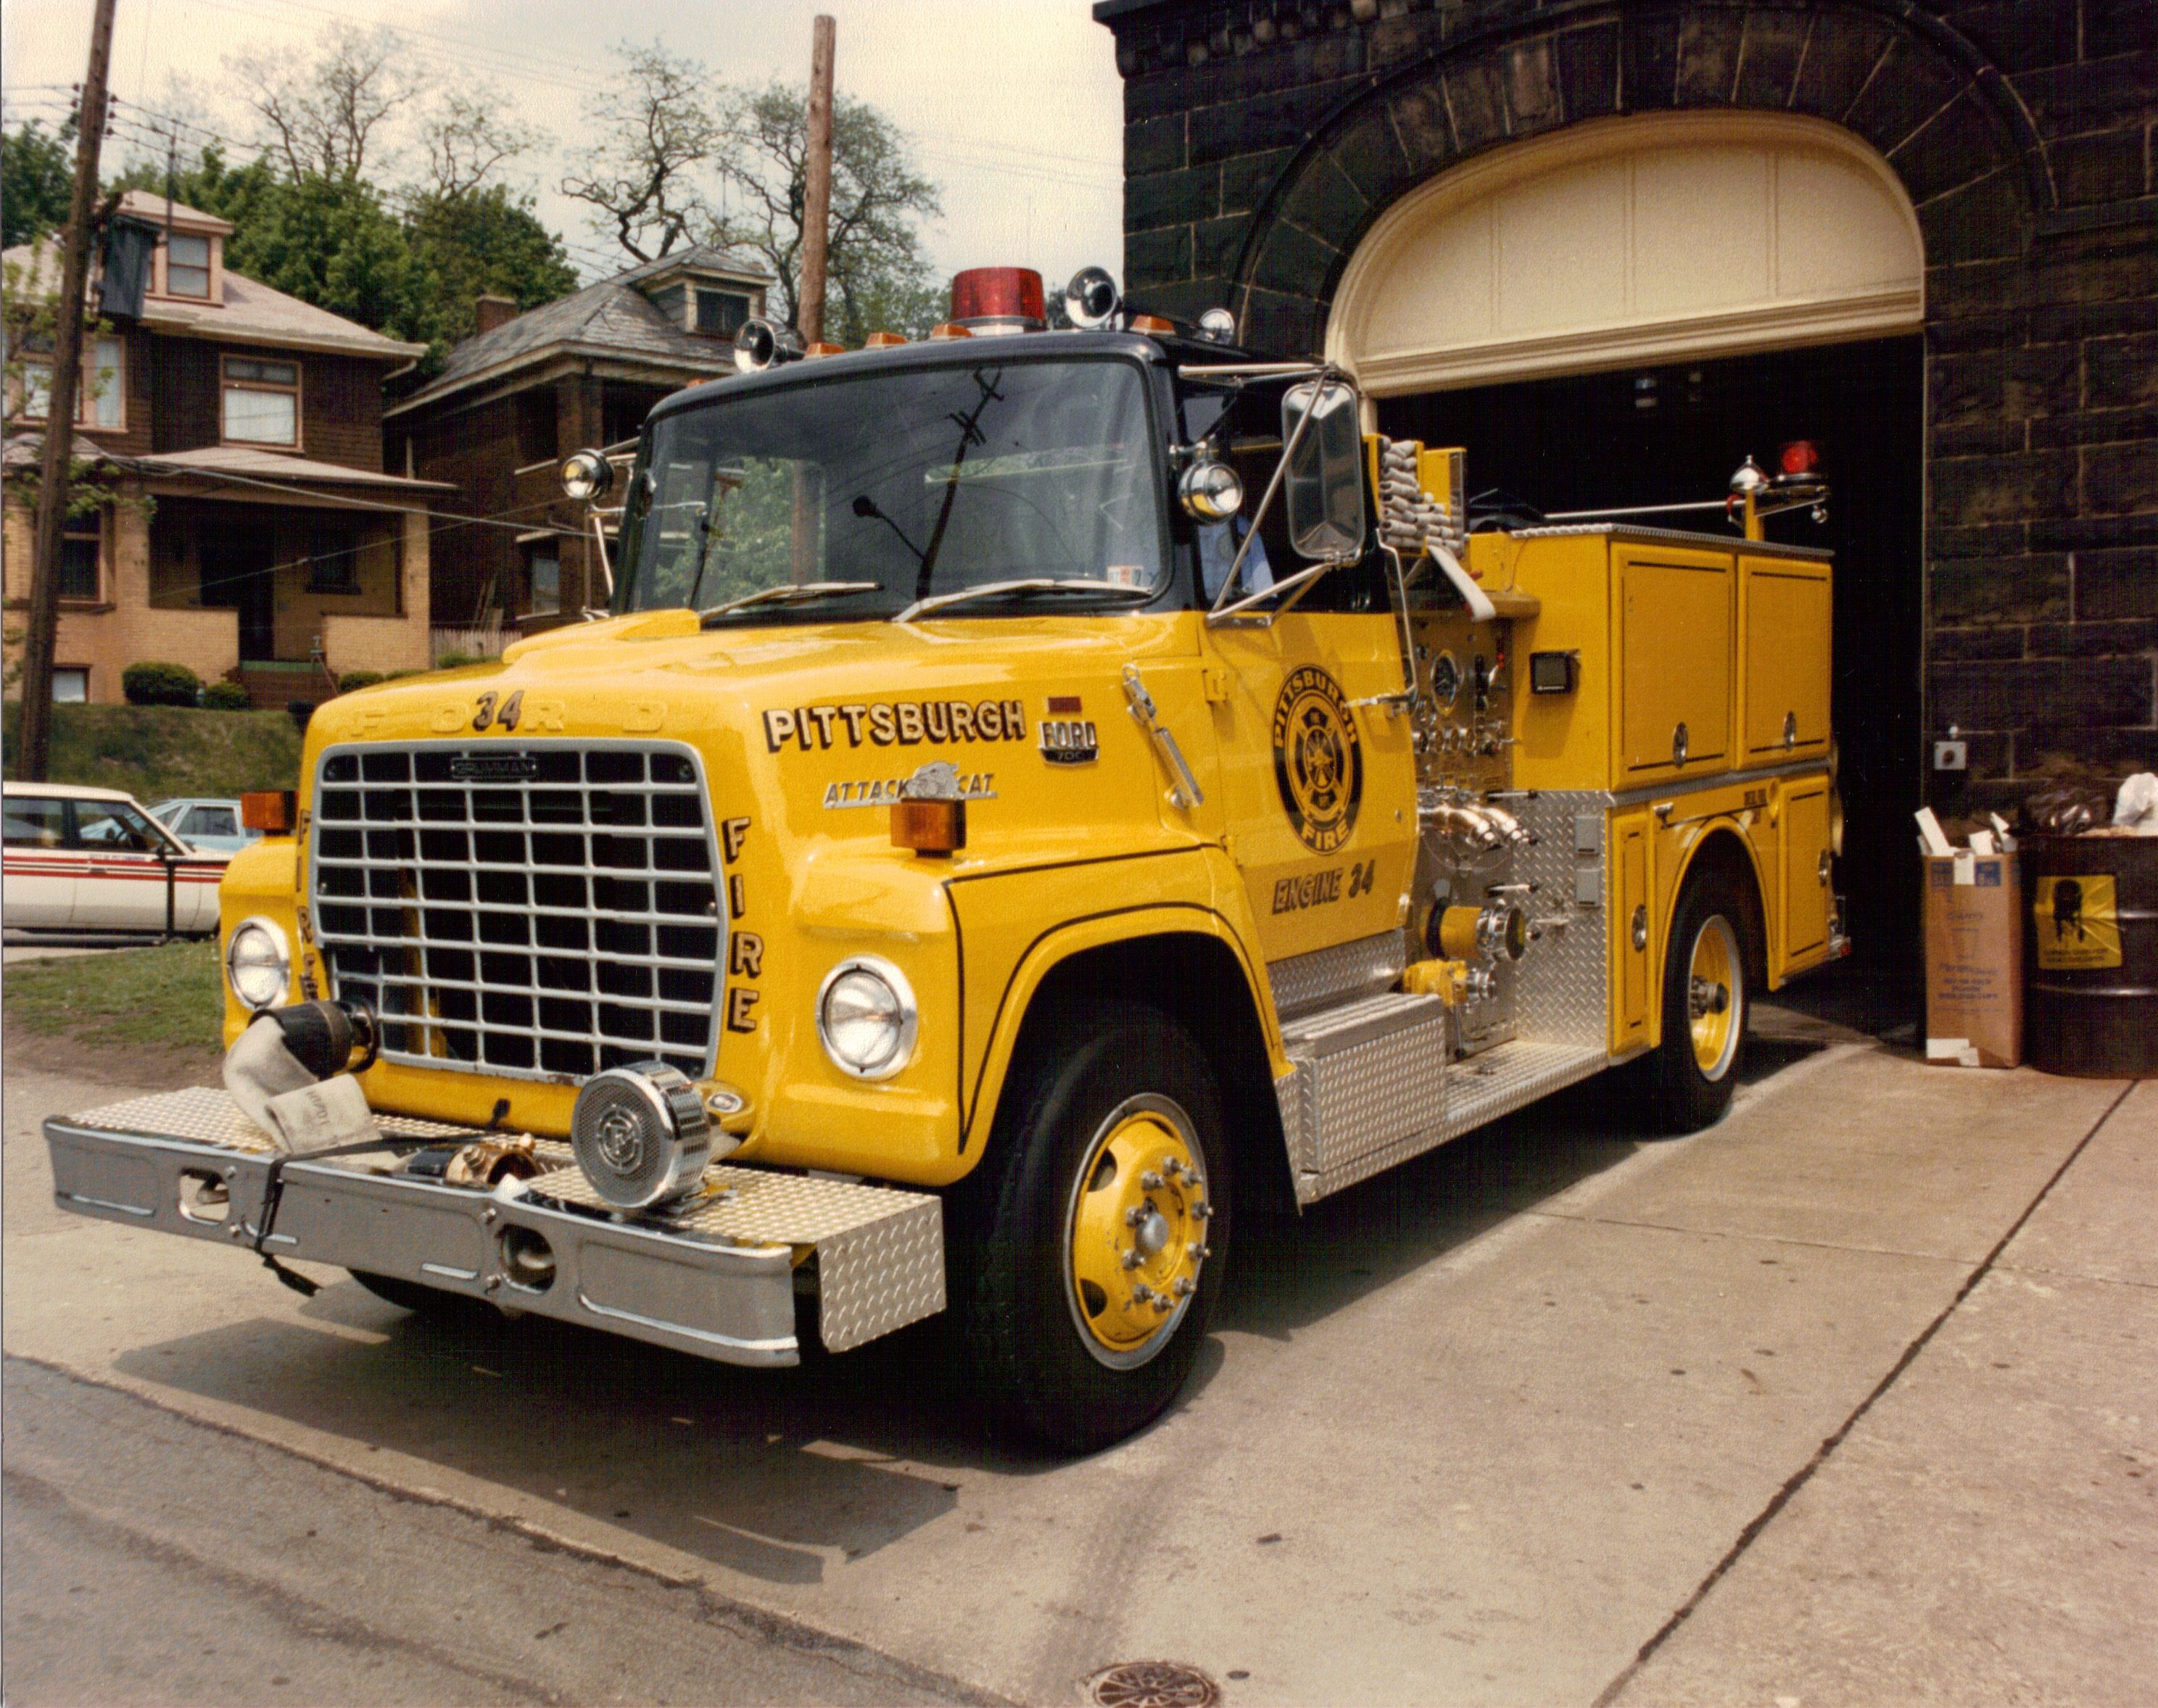 Pittsburgh fire engine photo